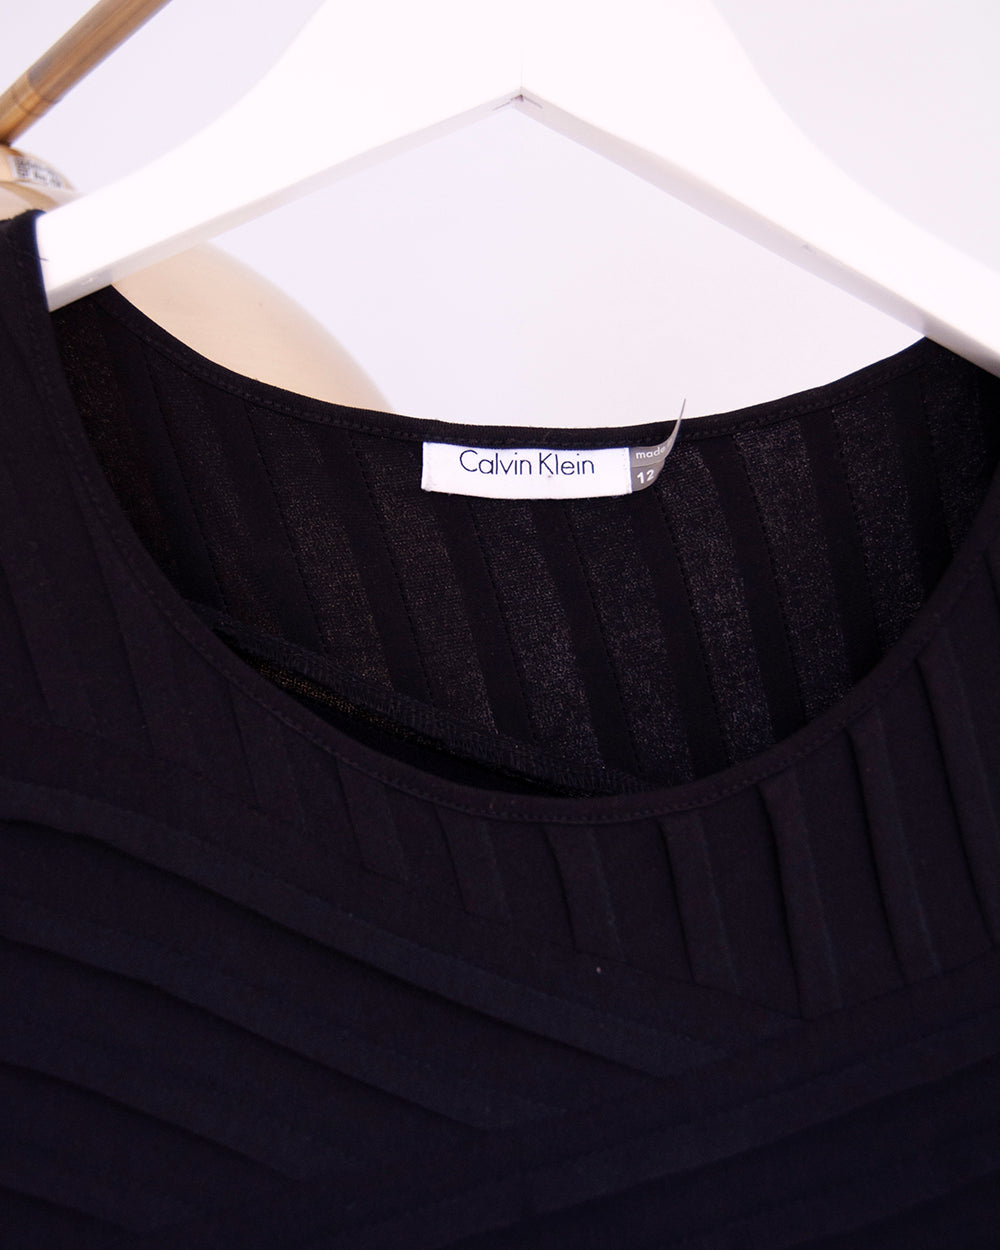 Calvin Klein black jersey dress